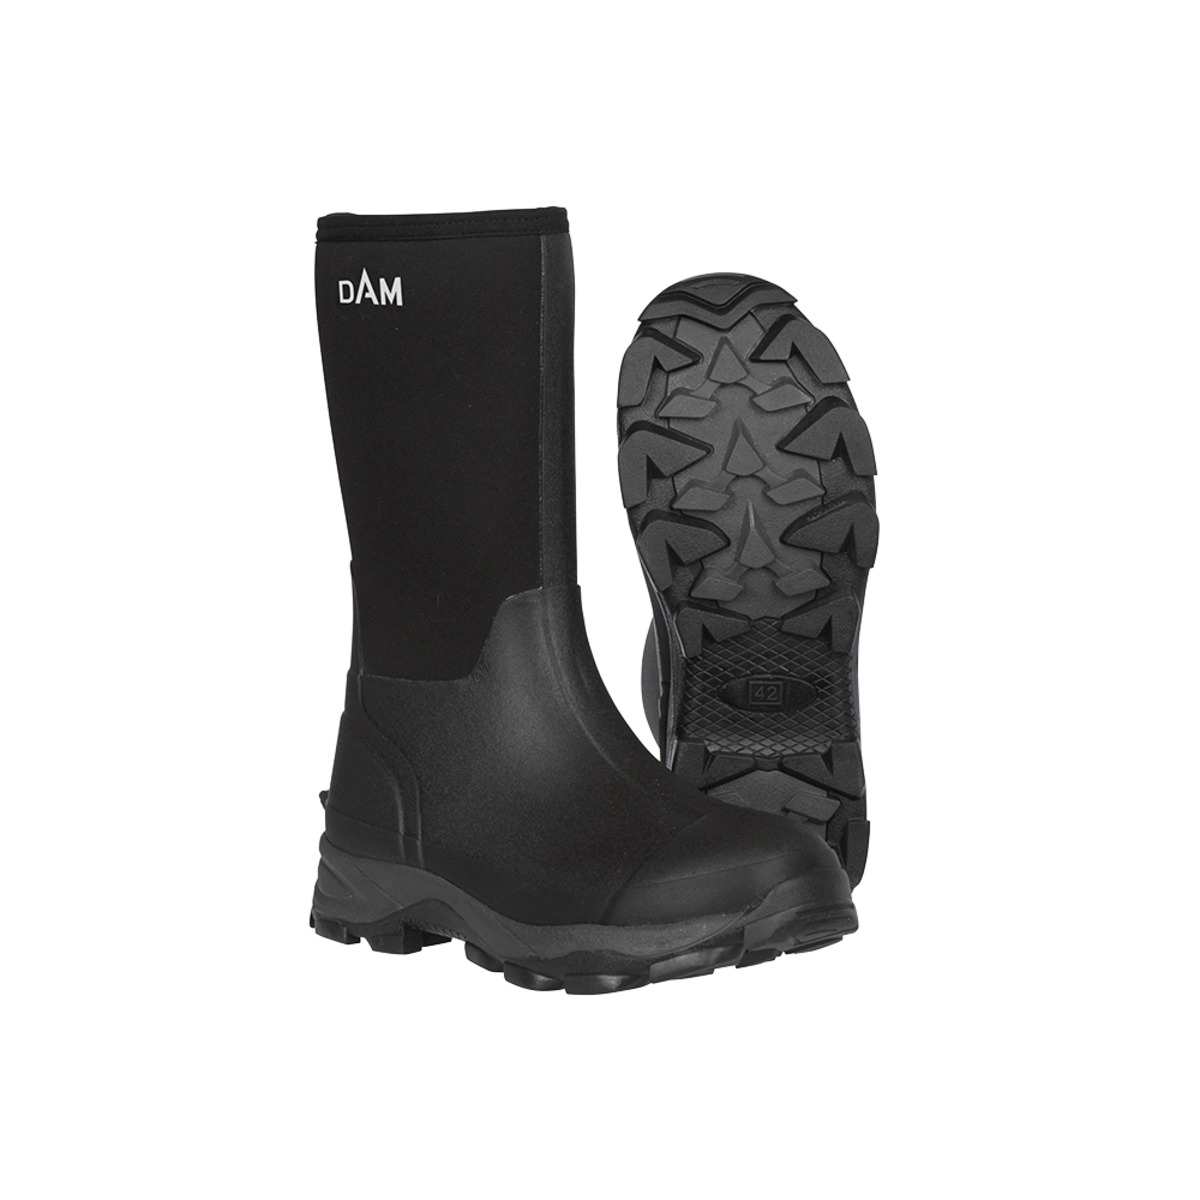 Dam Tira Boots Rubber/neoprene - 43/8 BLACK